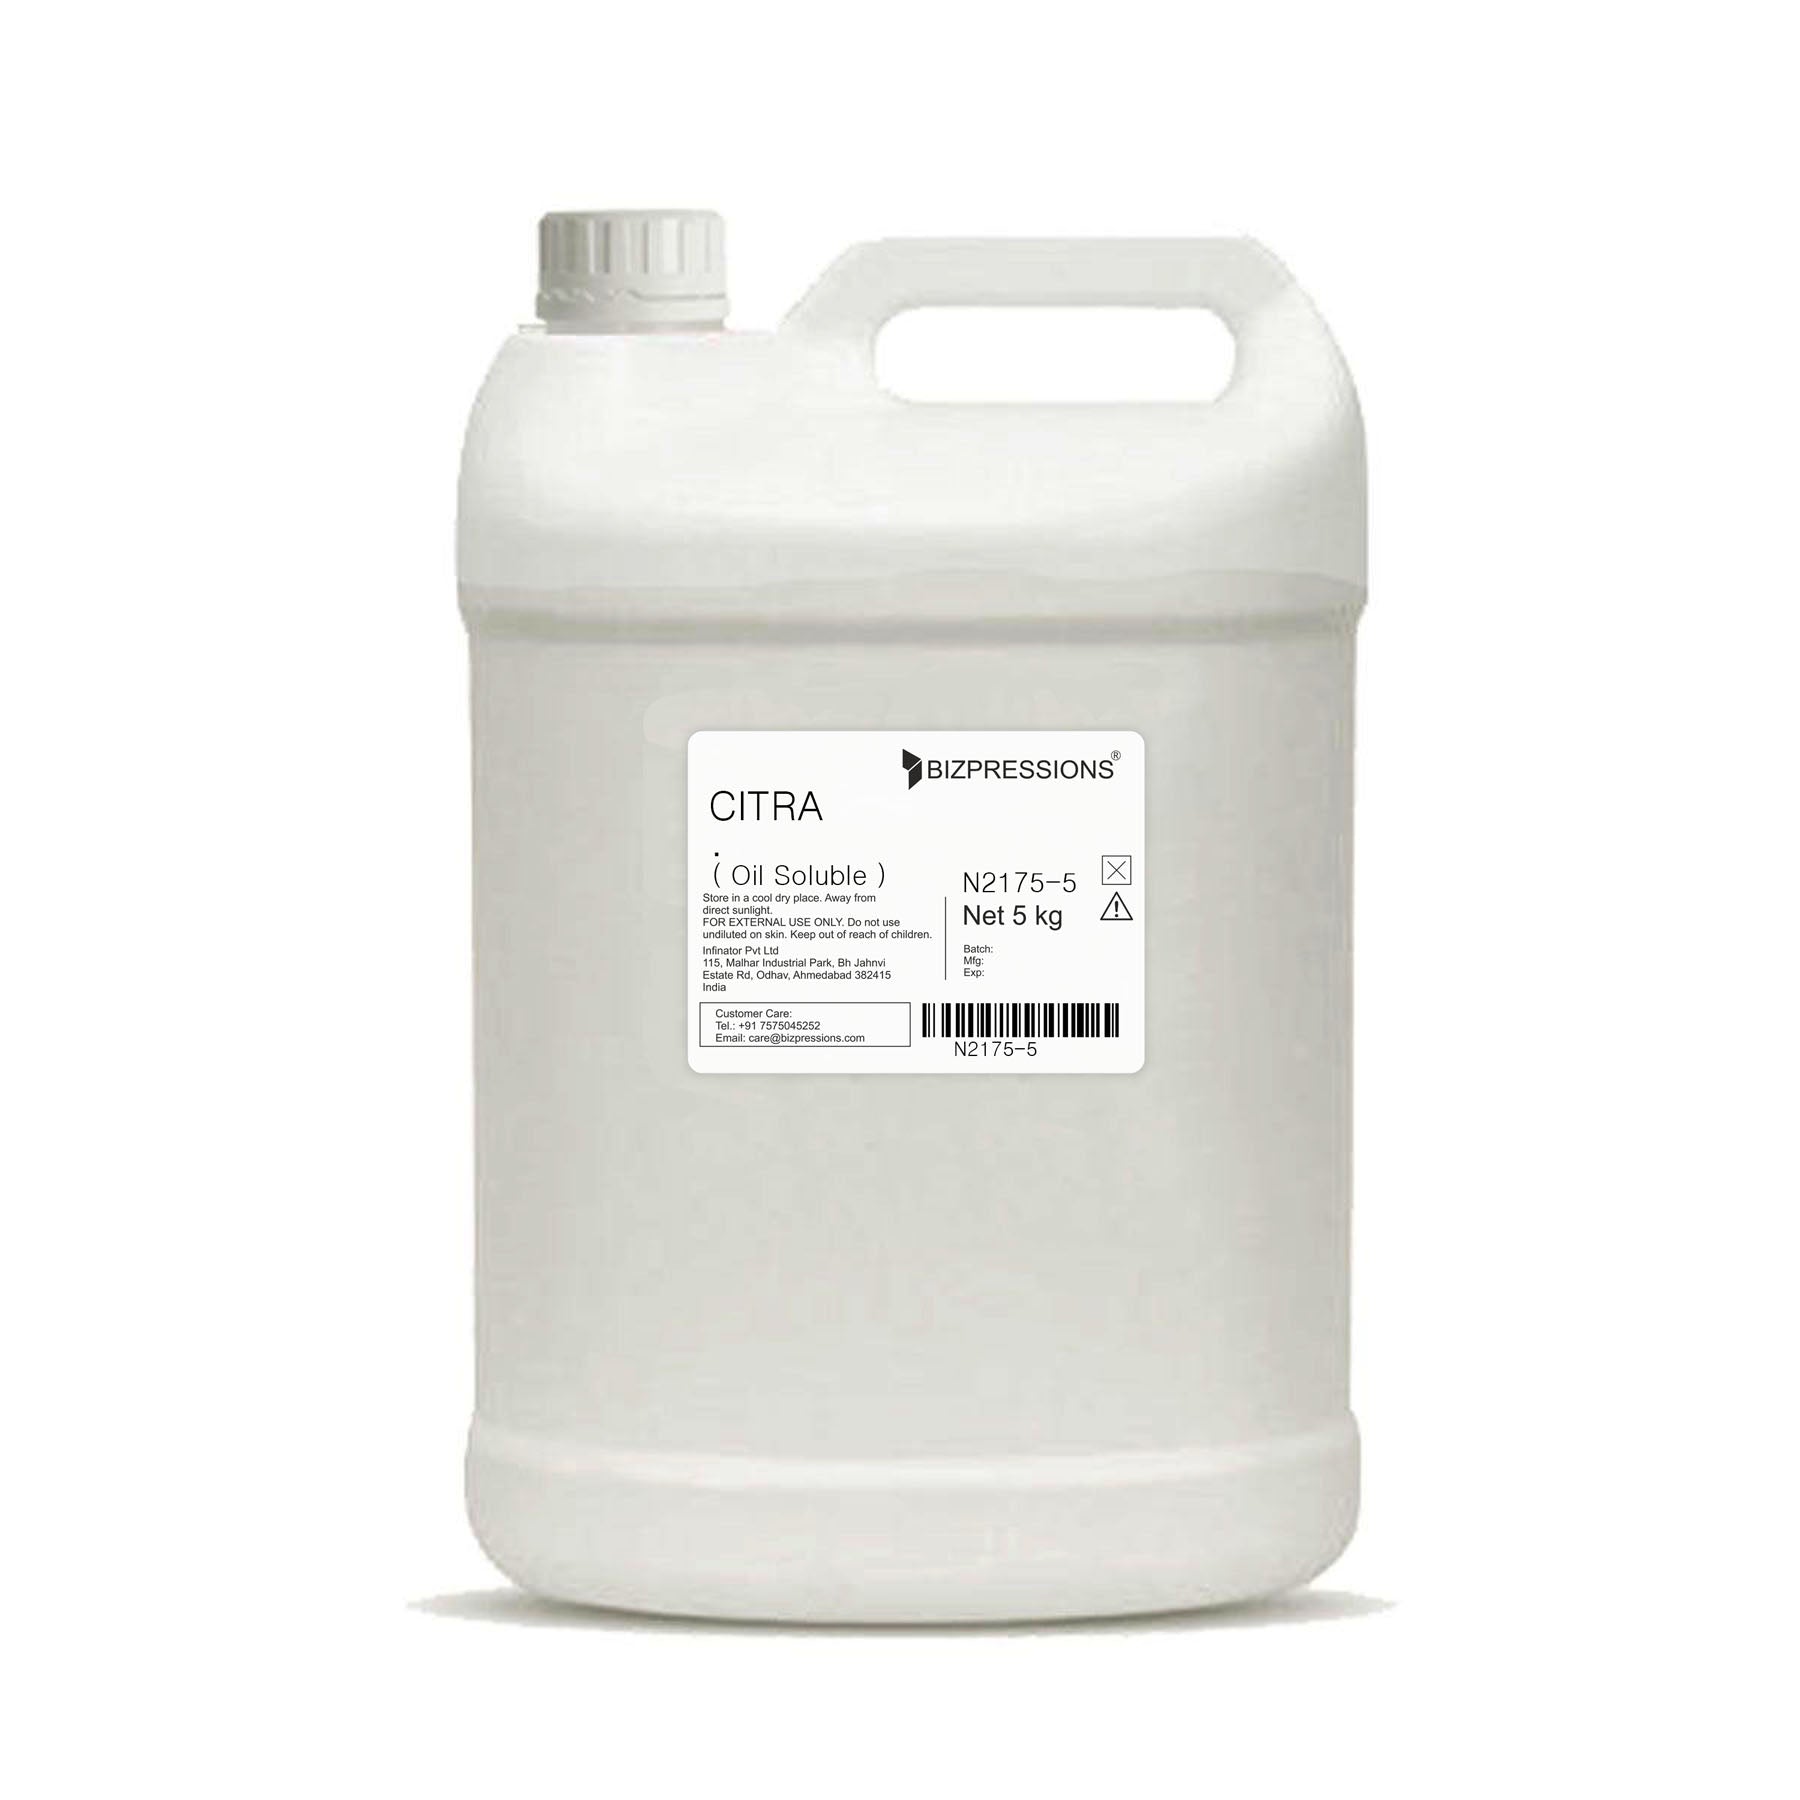 CITRA - Fragrance ( Oil Soluble ) - 5 kg